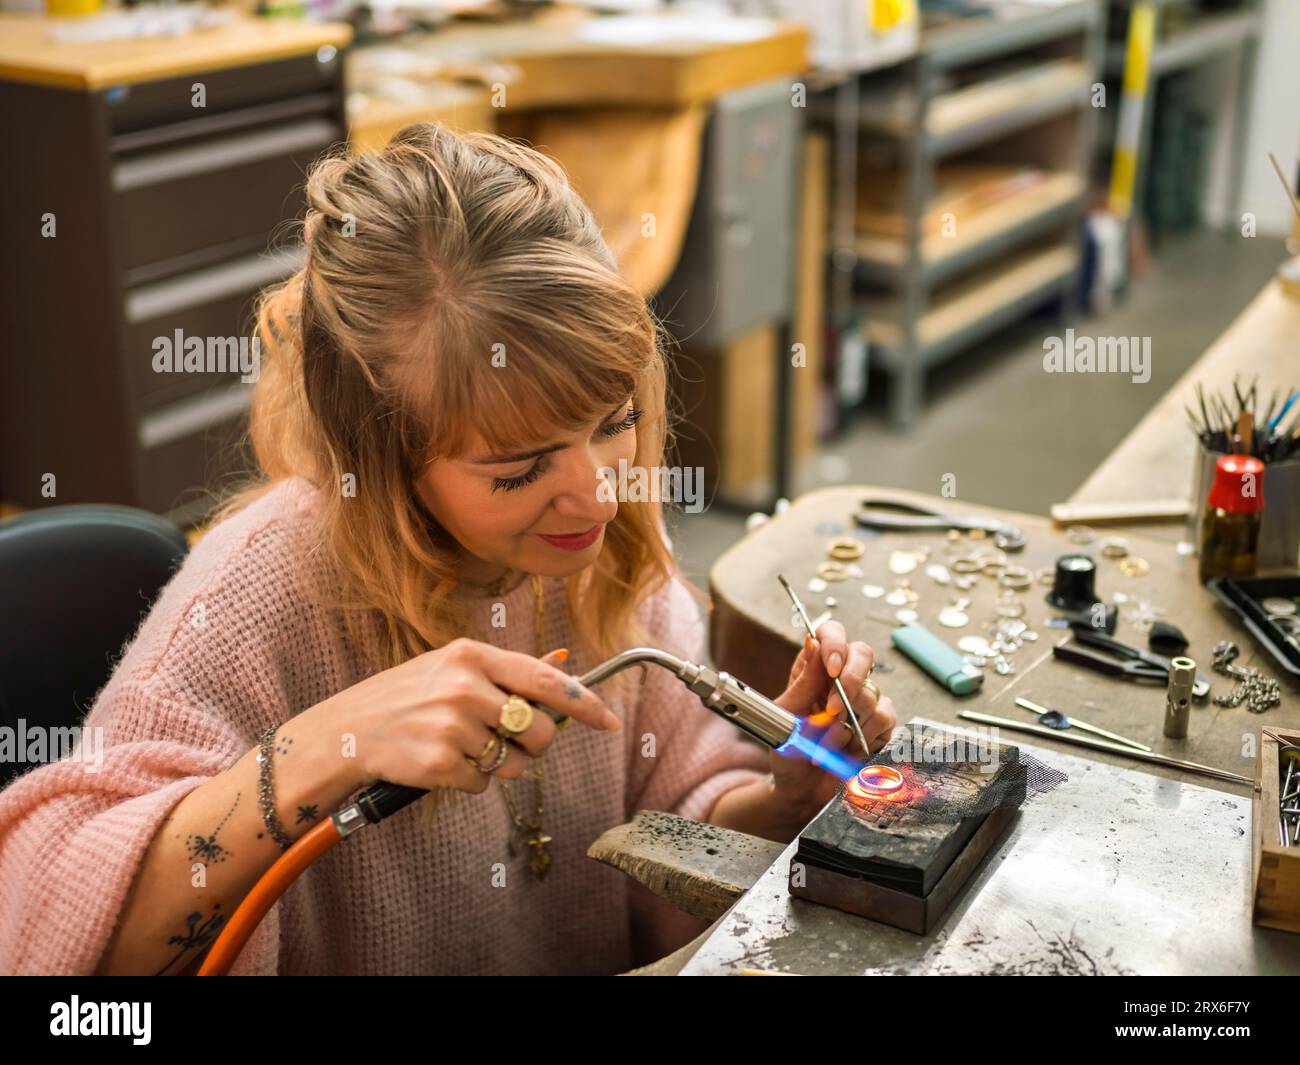 Smiling craftsperson welding gold ring at workshop Stock Photo